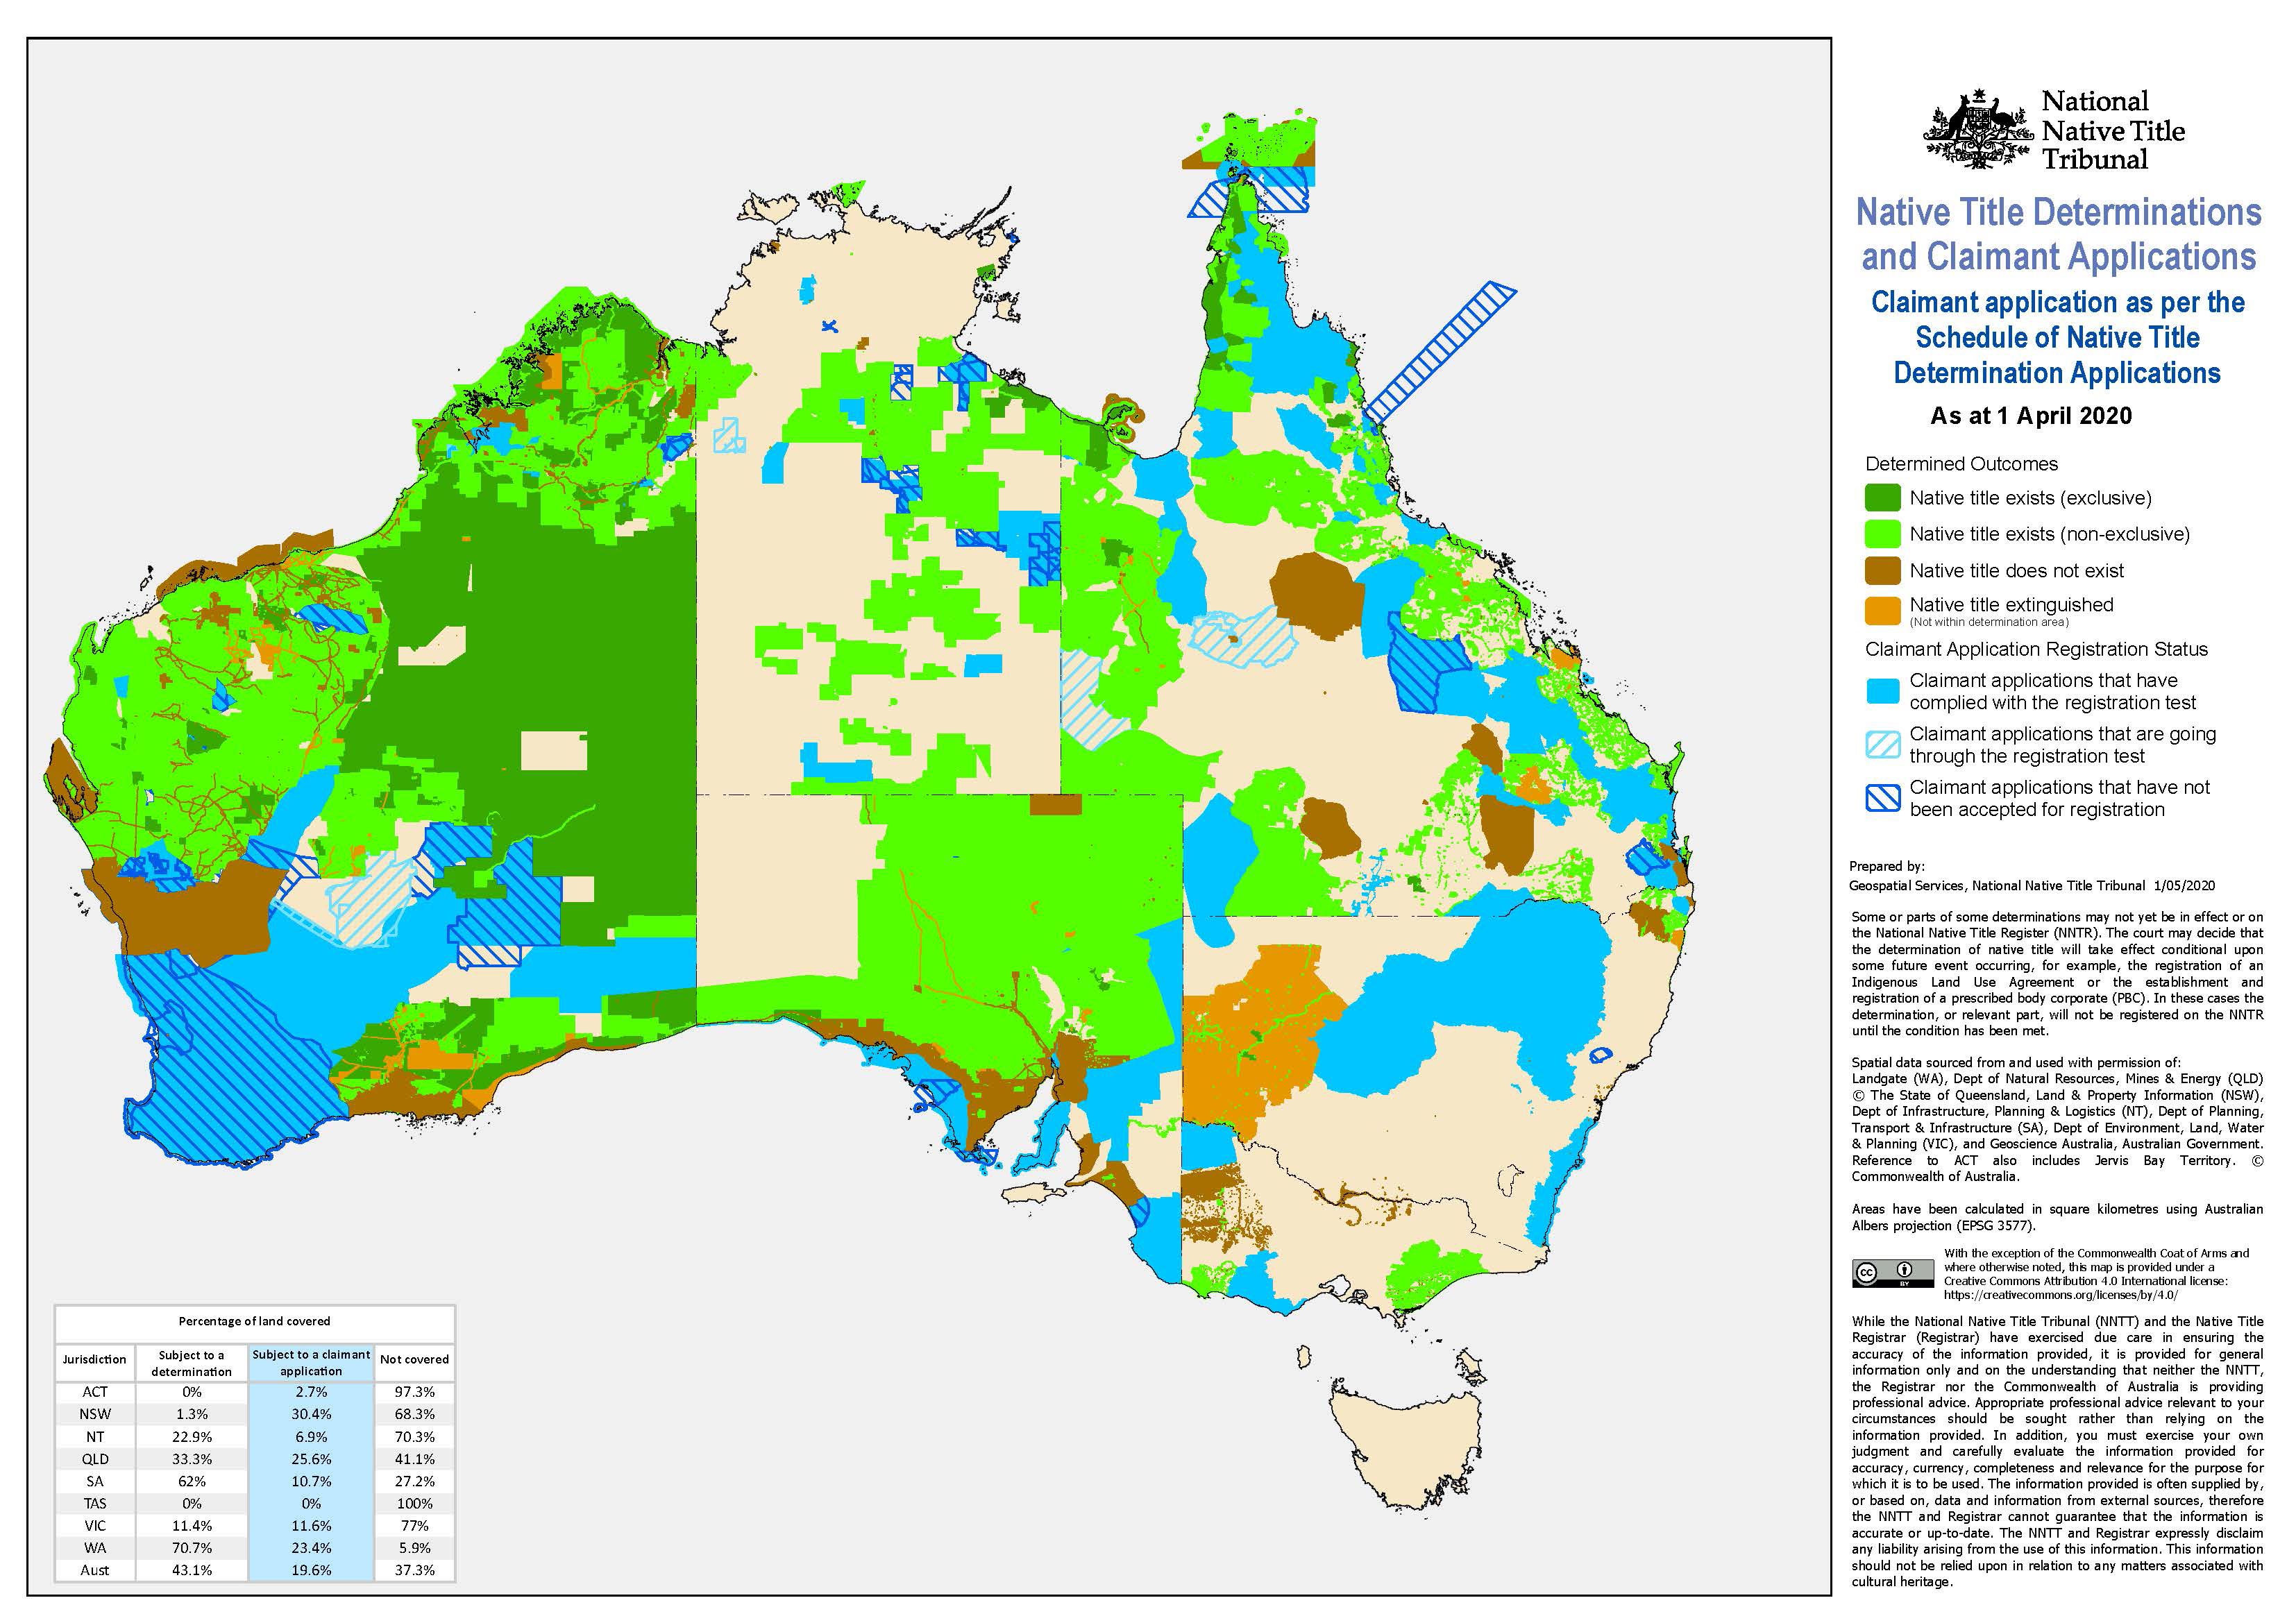 National Native Title Tribunal map of Australia.